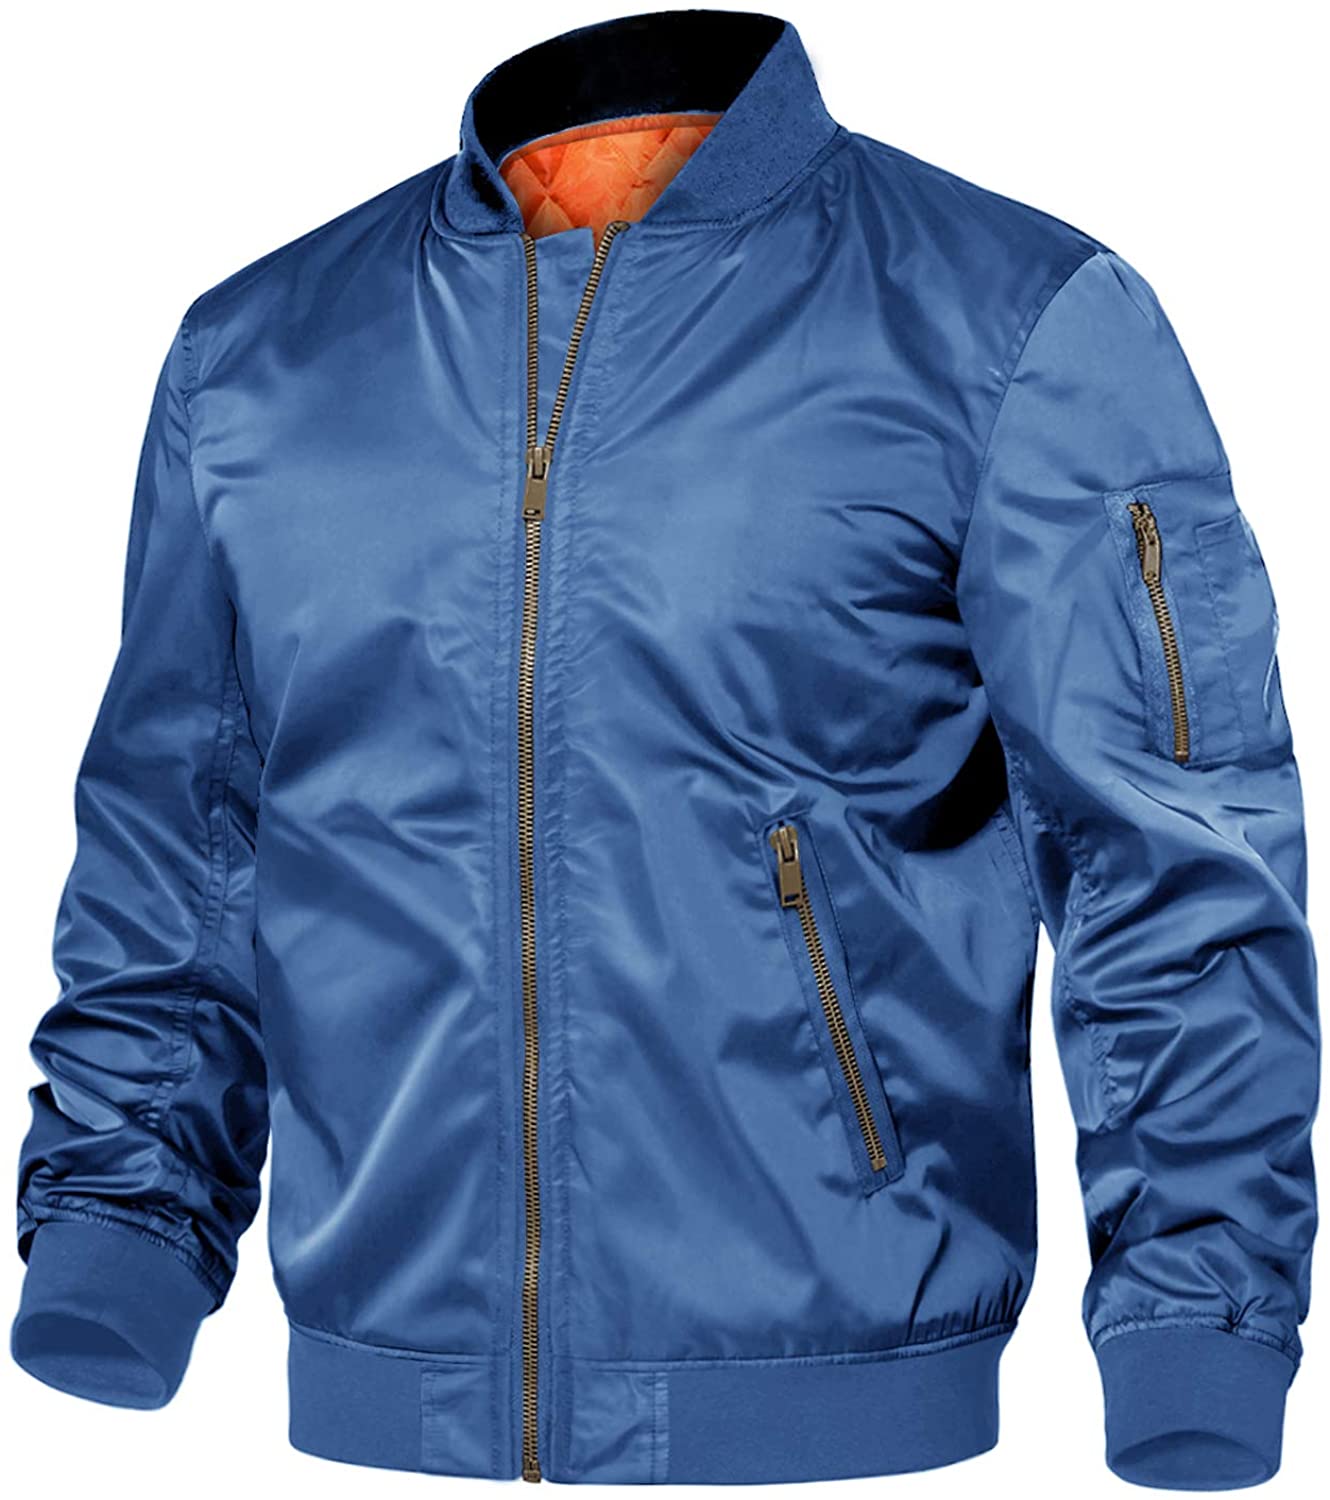 TACVASEN Mens Outdoor Jackets Casual Bomber Jacket Windproof Outwear Coat Lined Warm Winter Jacket 